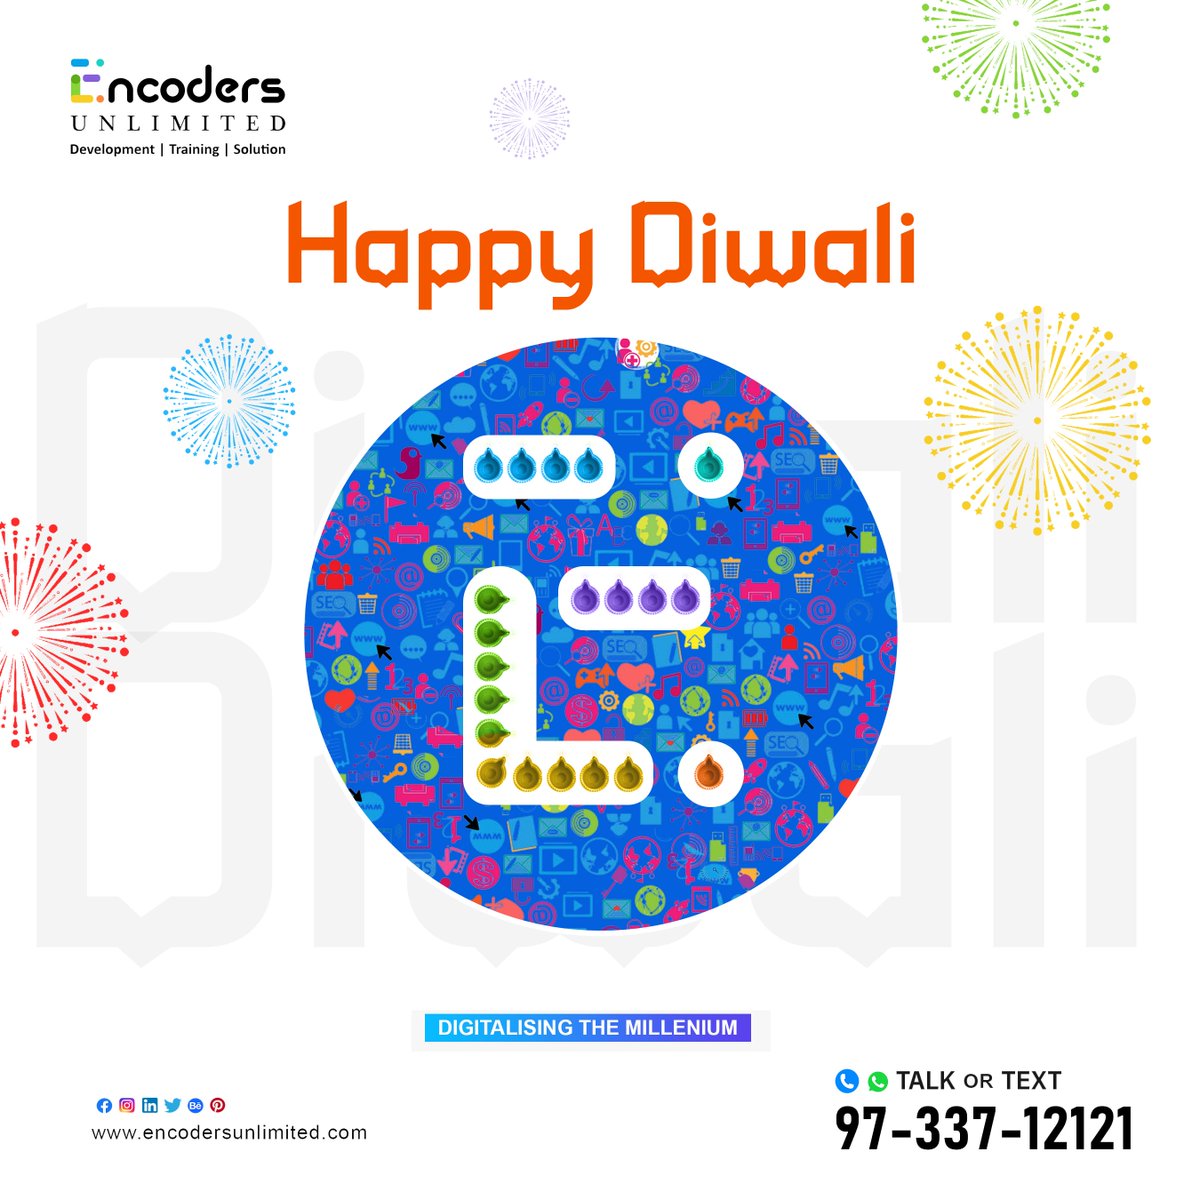 𝗘𝗡𝗖𝗢𝗗𝗘𝗥𝗦 𝗨𝗡𝗟𝗜𝗠𝗜𝗧𝗘𝗗 wishing you and your family 𝐇𝐚𝐩𝐩𝐲 𝐃𝐢𝐰𝐚𝐥𝐢.❤️❤️
.
𝗖𝗼𝗻𝘁𝗮𝗰𝘁 𝗨𝘀:
📷𝟵𝟳-𝟯𝟯𝟳-𝟭𝟮𝟭𝟮𝟭
📷𝘄𝘄𝘄.𝗲𝗻𝗰𝗼𝗱𝗲𝗿𝘀𝘂𝗻𝗹𝗶𝗺𝗶𝘁𝗲𝗱.𝗰𝗼𝗺
#HappyDiwali #Diwali2023 #creativeposts #india #instagram #digitalads #digitalmaketing